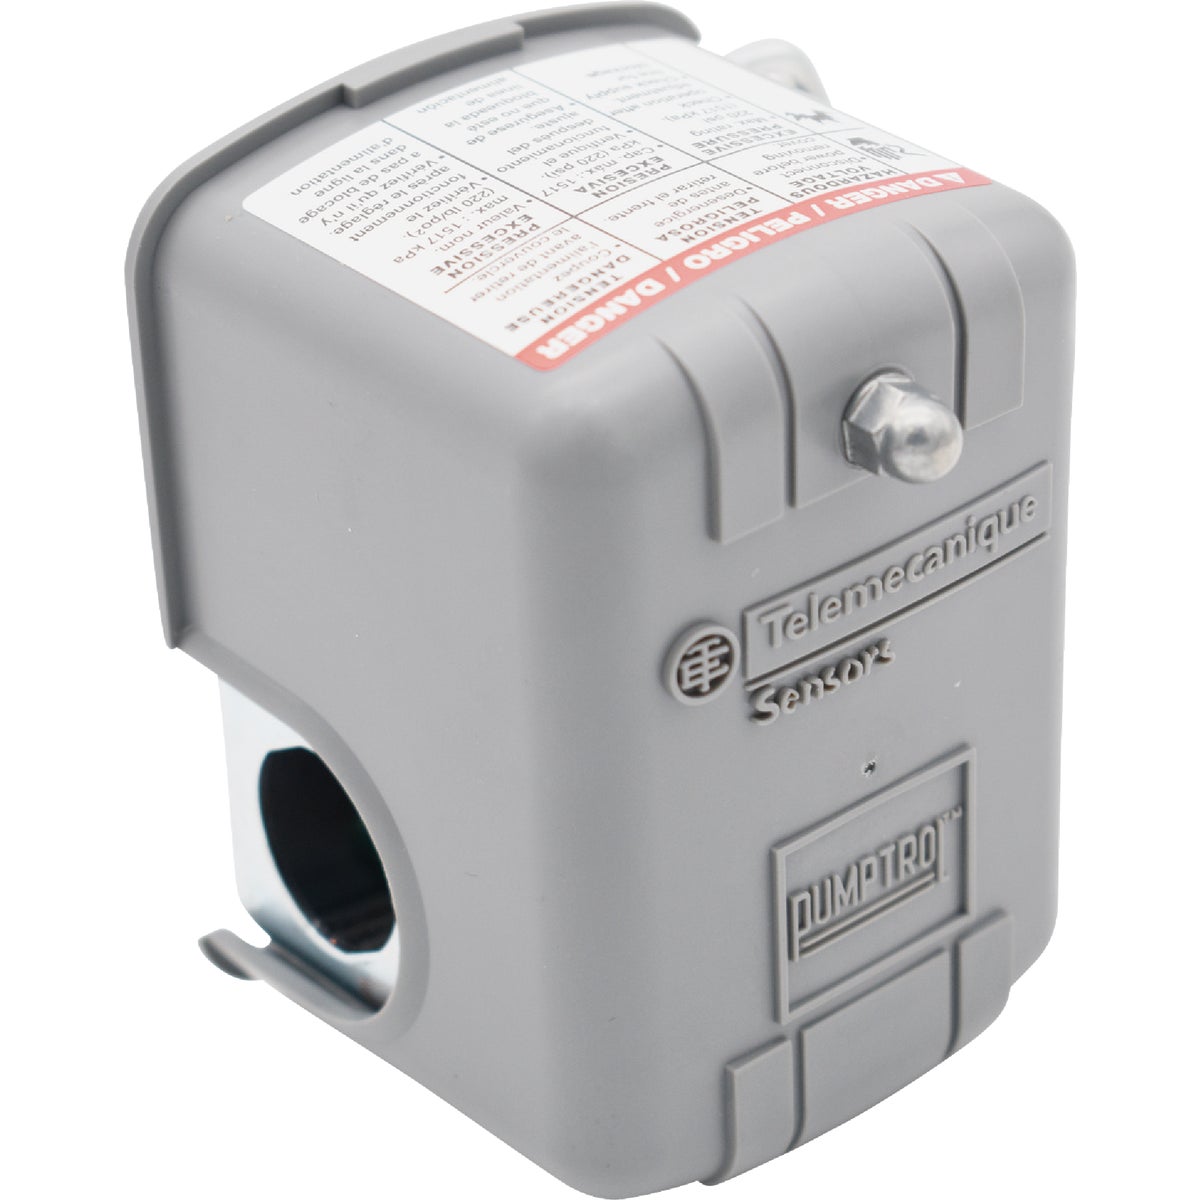 Square D Pumptrol 20 - 40 psi  Actuated Pressure Switch